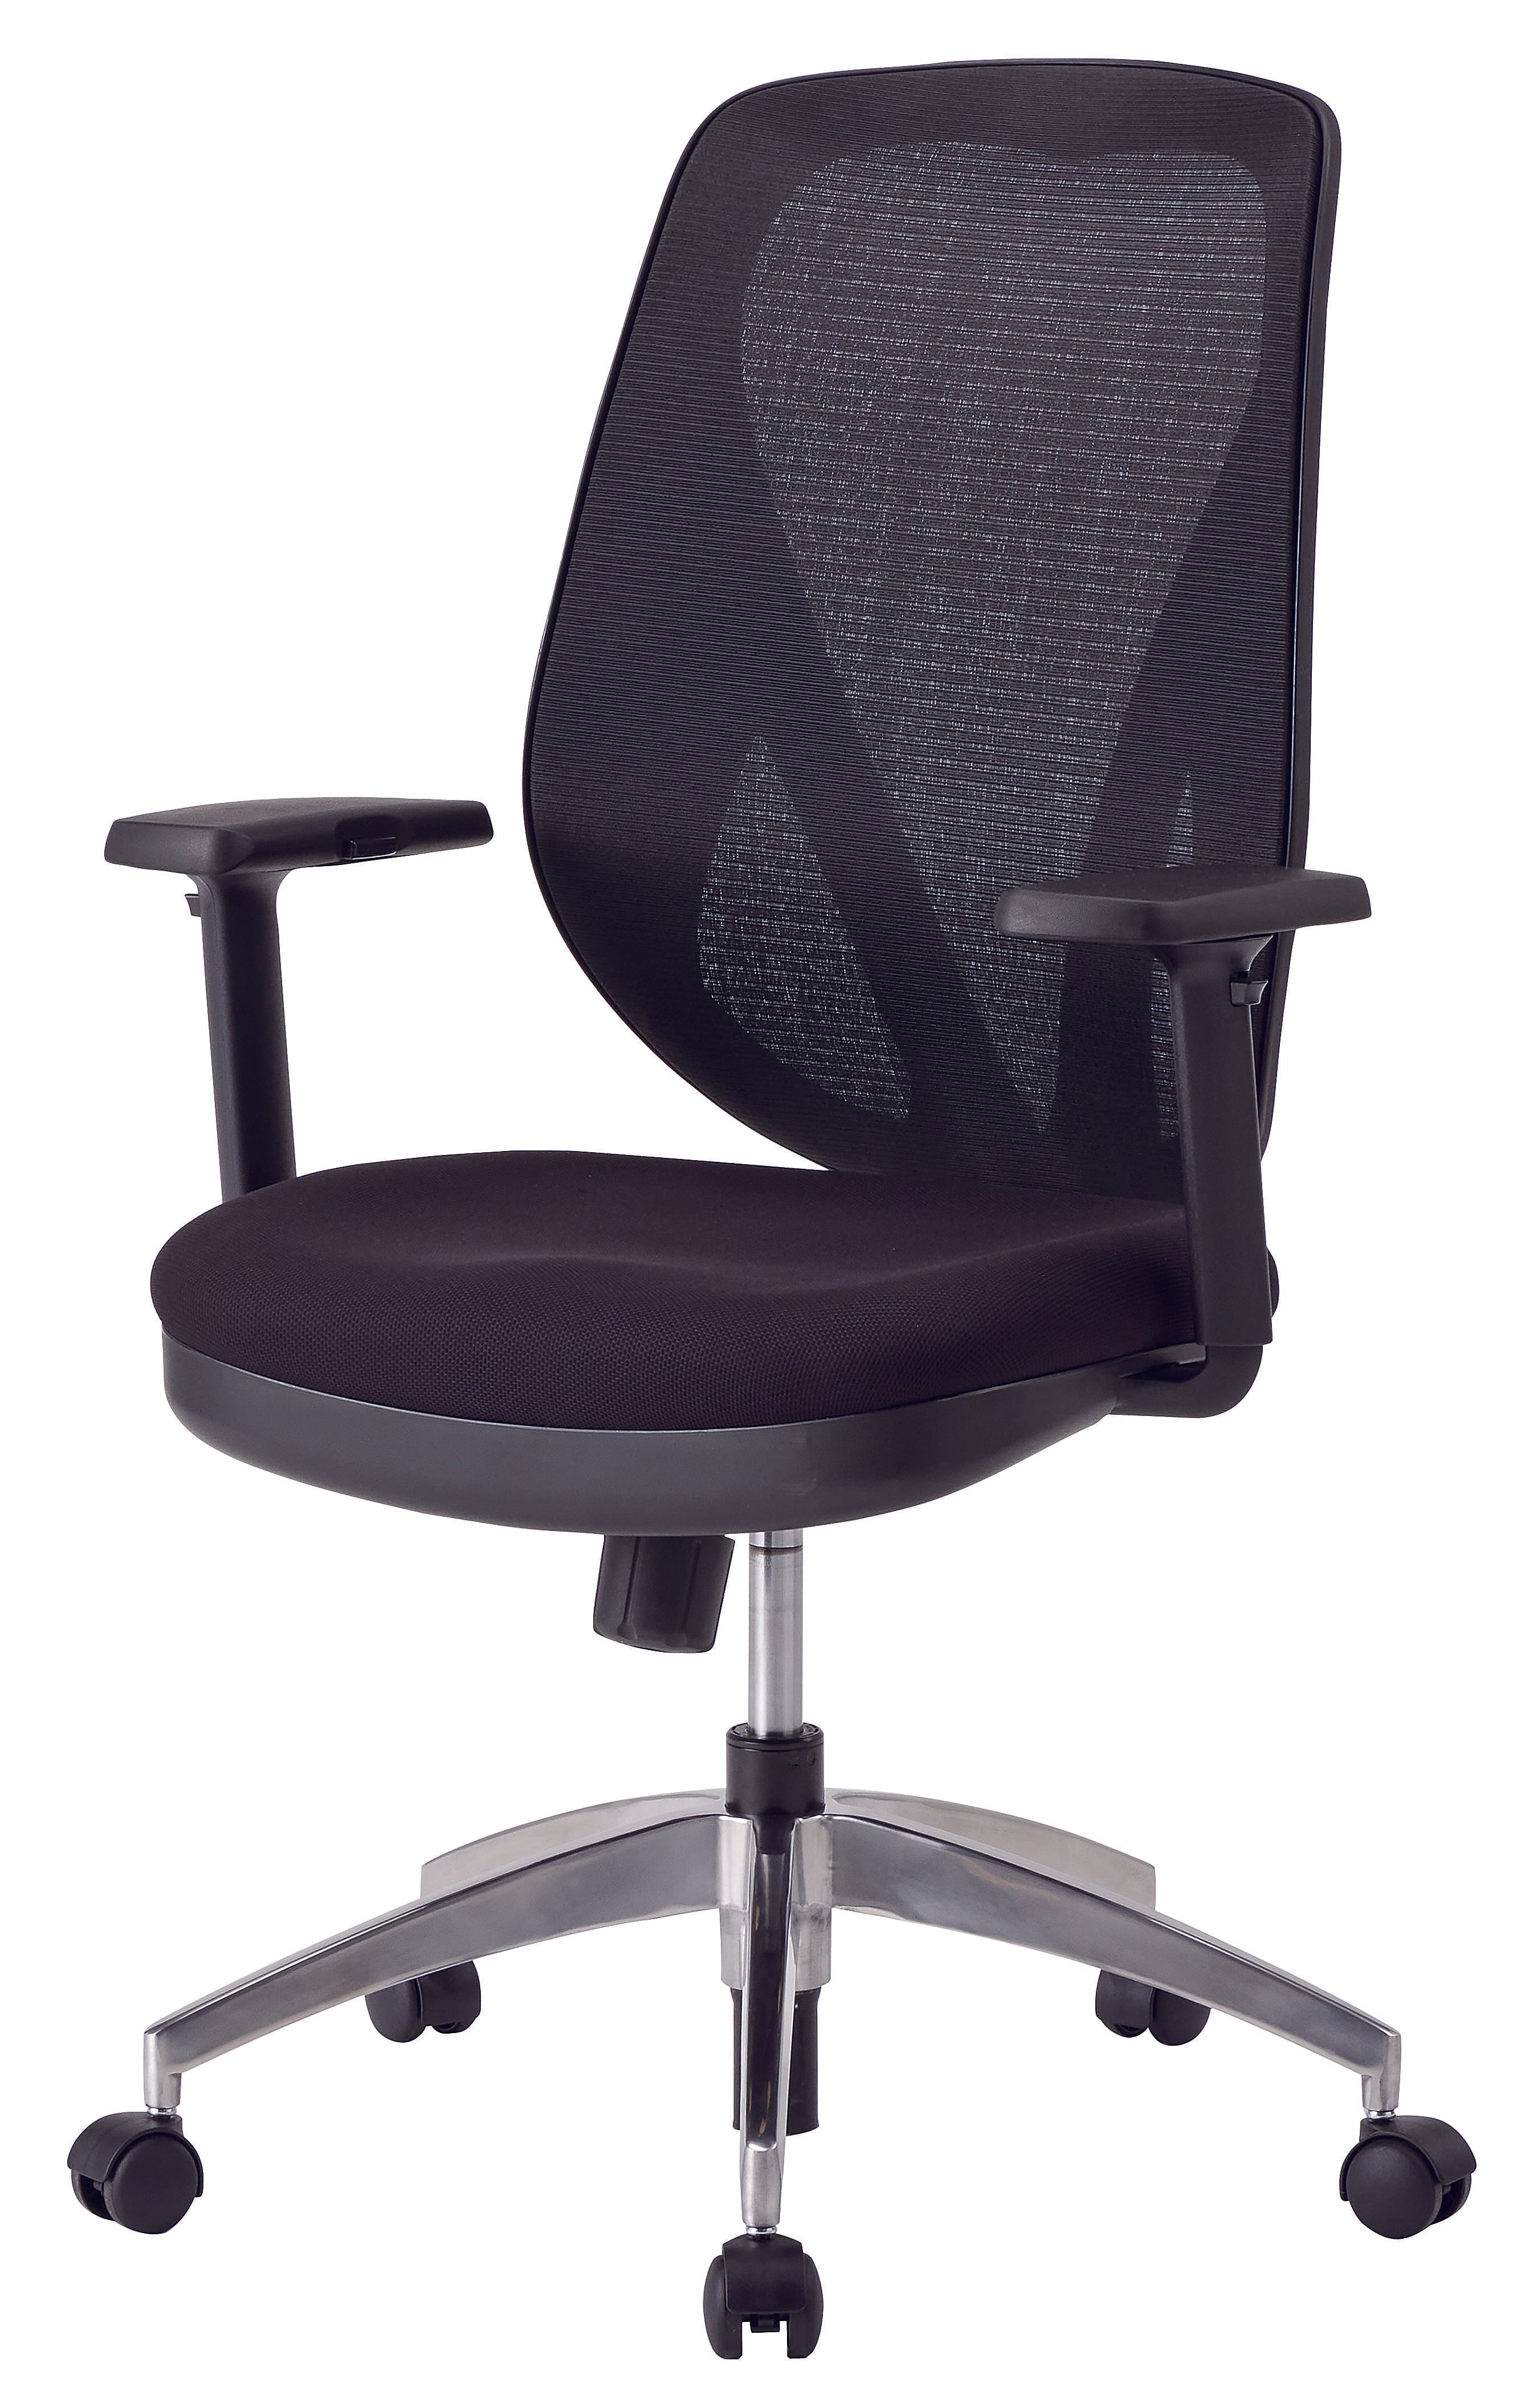 LAP Office Chair